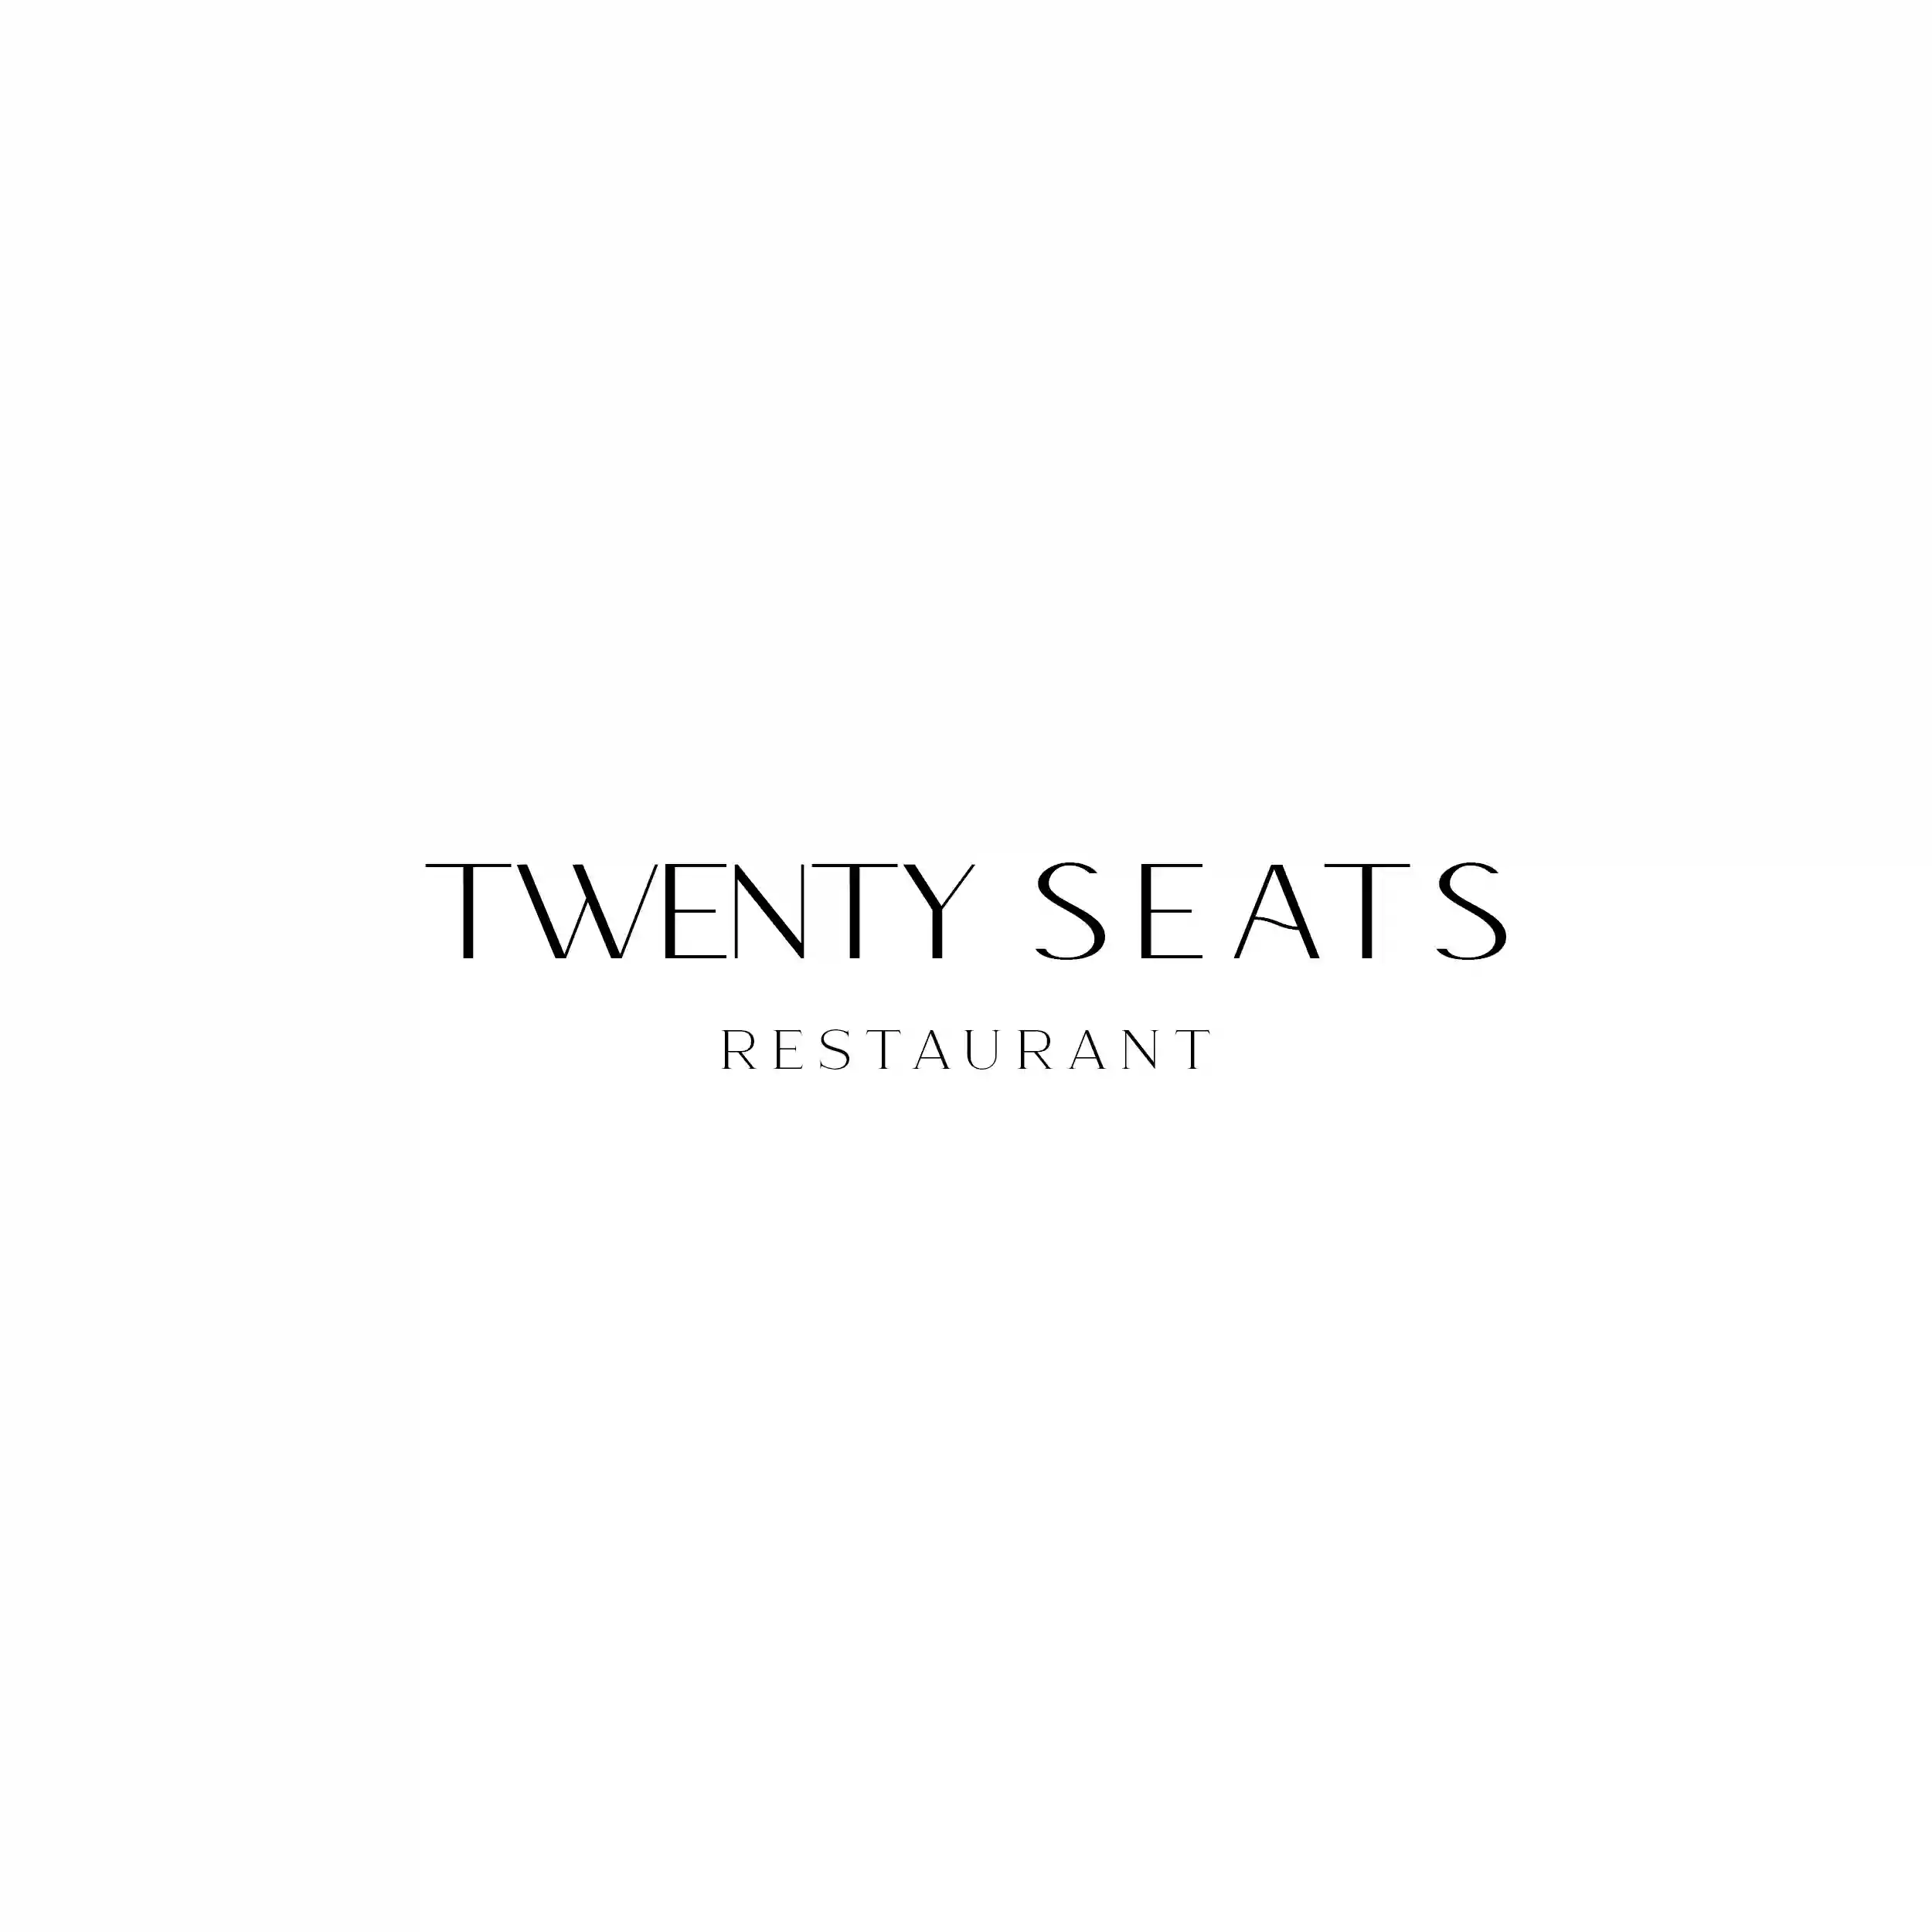 Twenty Seats